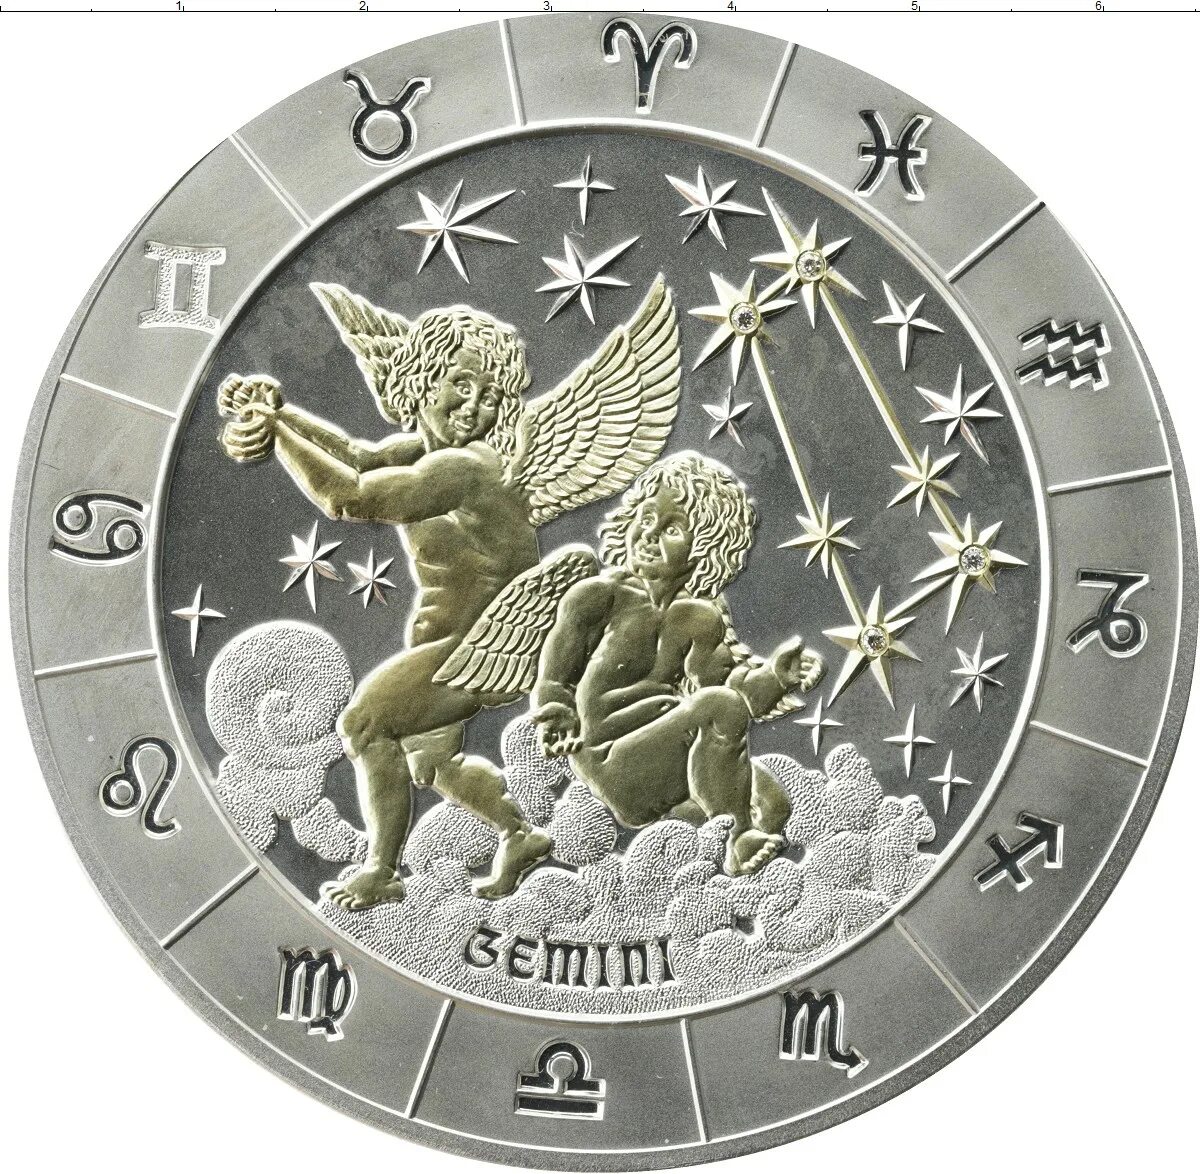 Монета 2009 Руанда 1000 франков (Francs) 2009 "знаки зодиака - Водолей". Монета 1000 руандских франков серебро. Монета 1000 франков Руанда. Монеты РСХБ серебро серебро знаки зодиака.